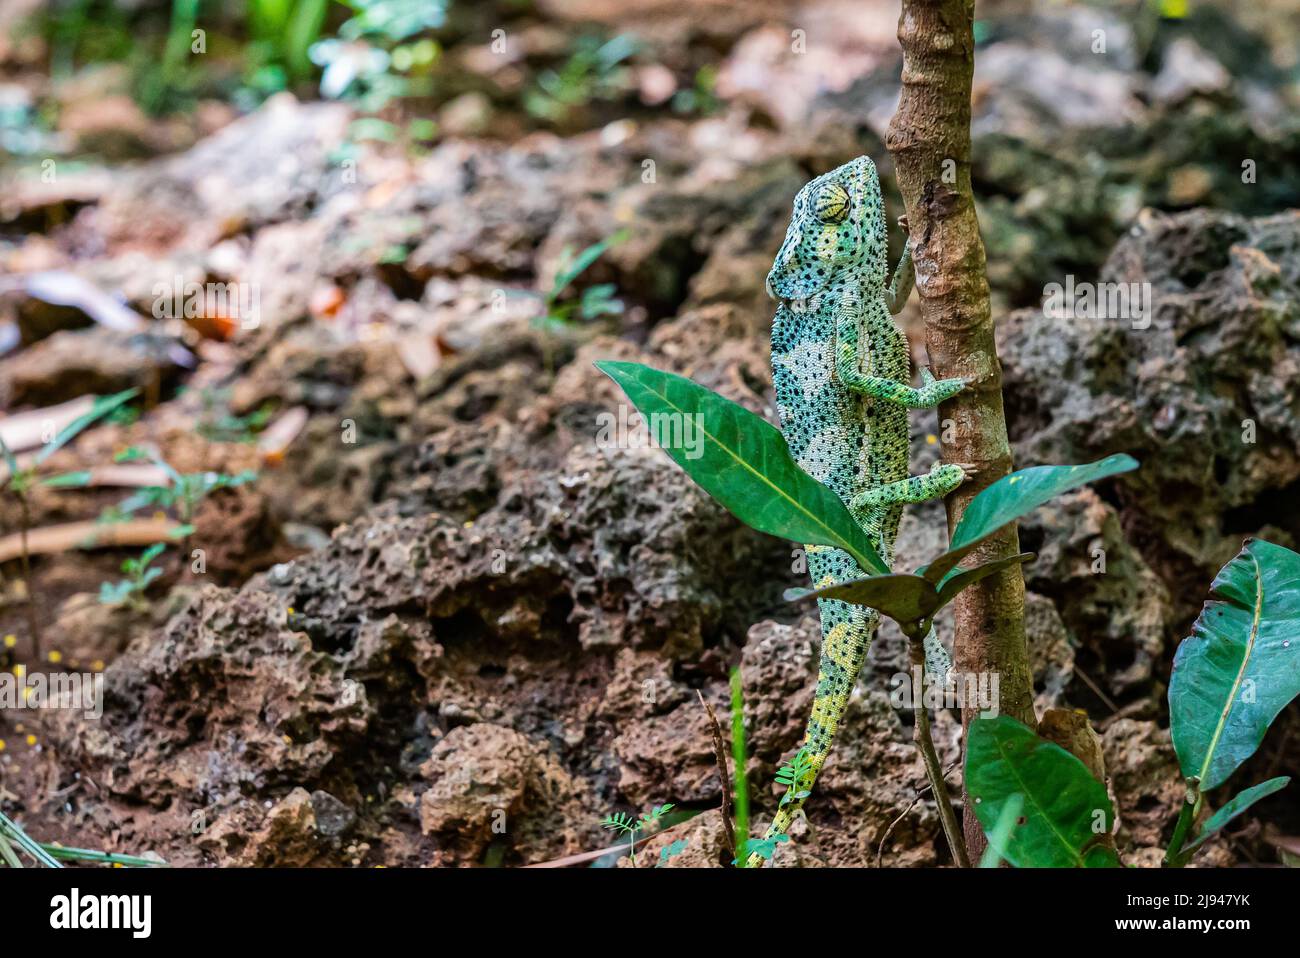 Chameleon climb on the tree. Chameleo on Zanzibar Stock Photo